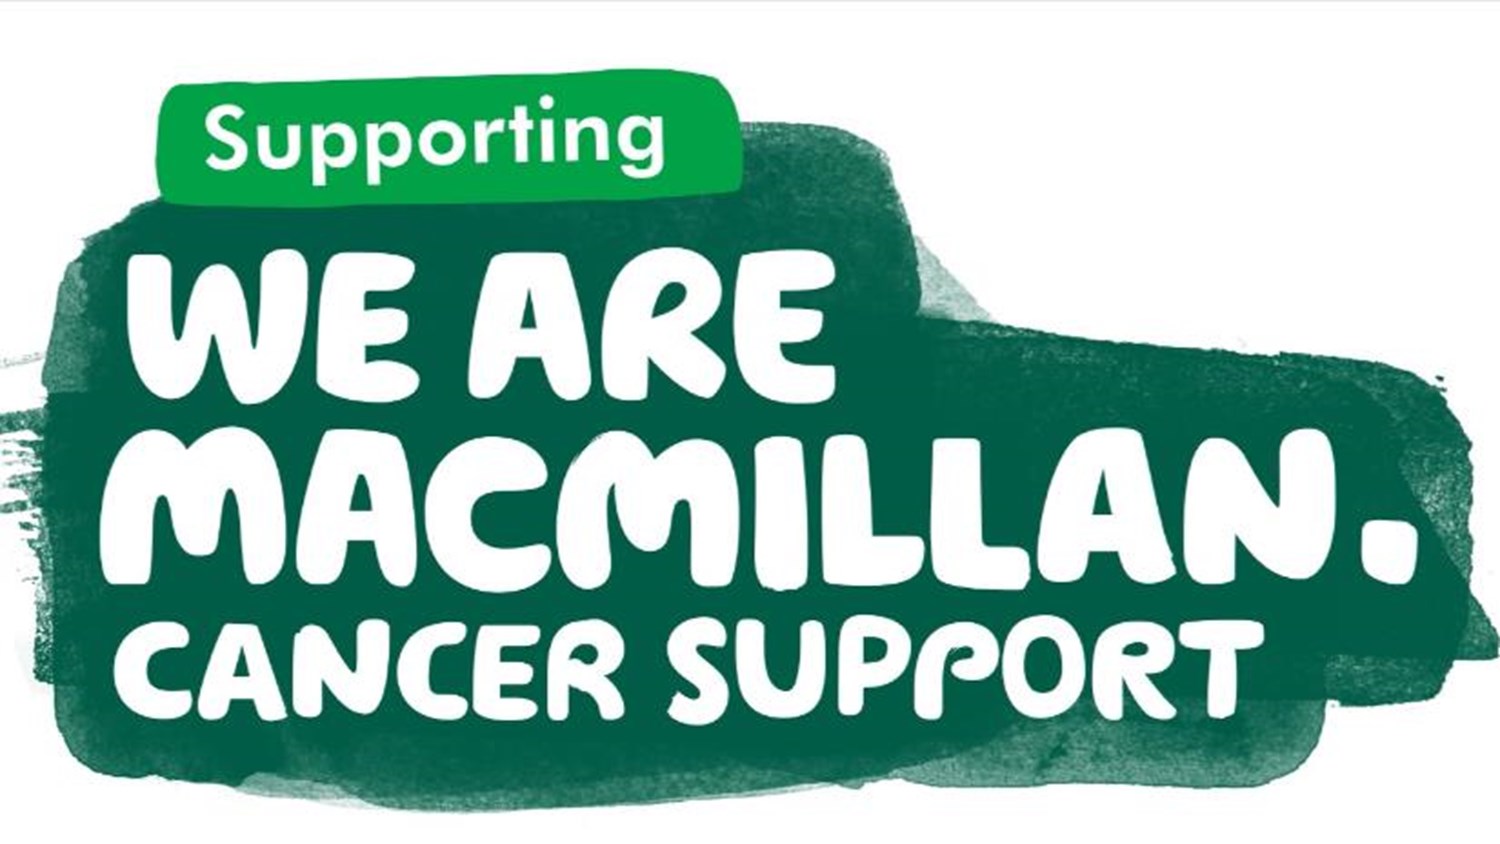 Macmillan Cancer Support.jpg